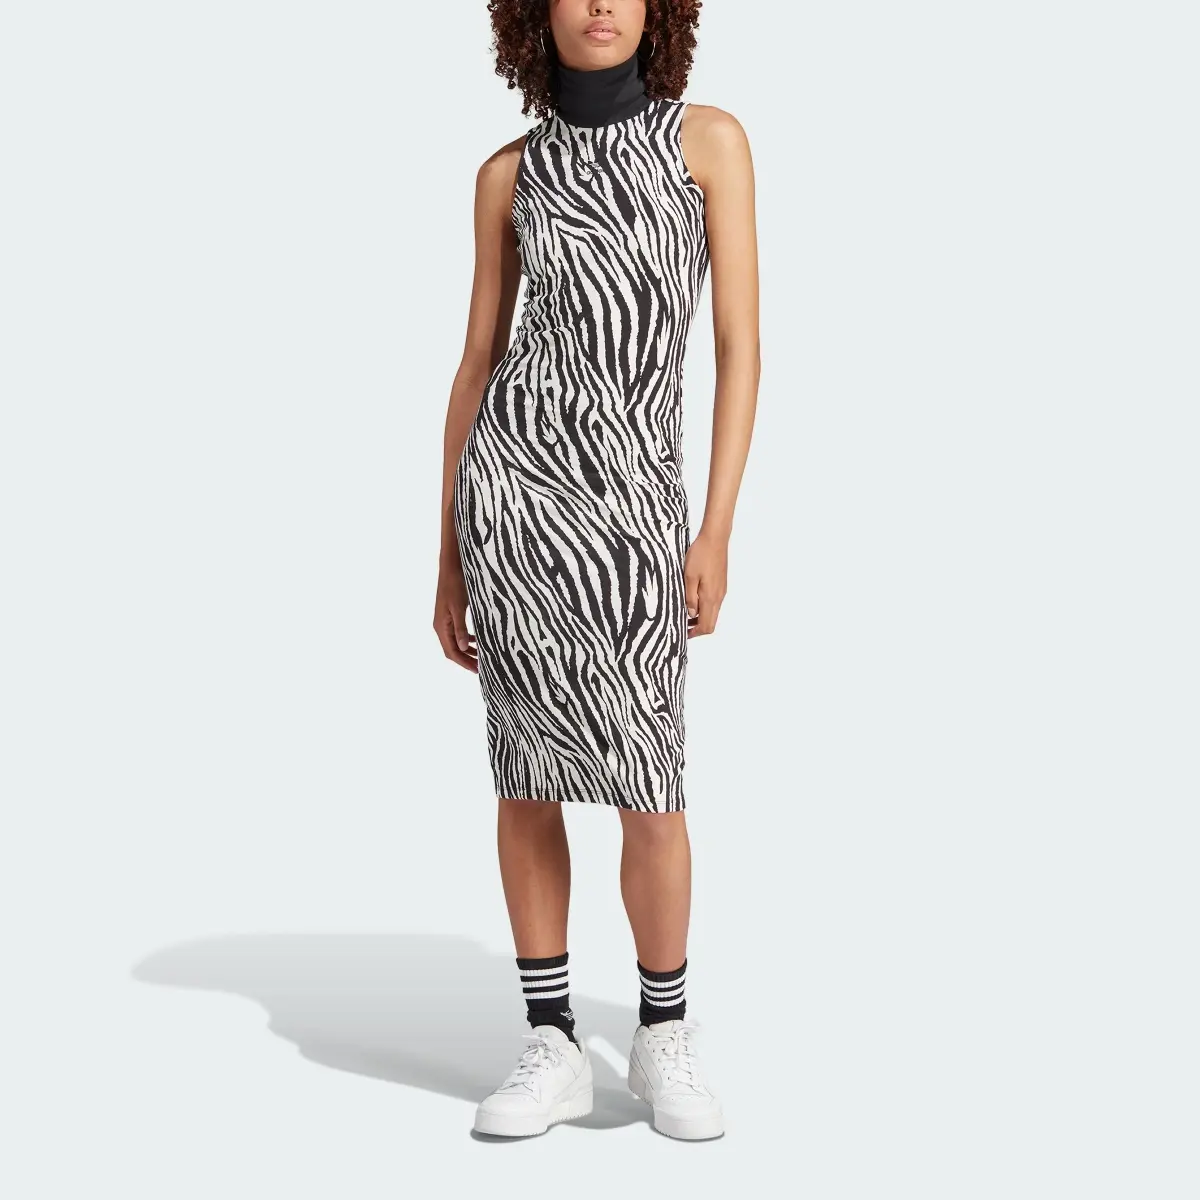 Adidas Vestido Allover Zebra Animal Print. 1